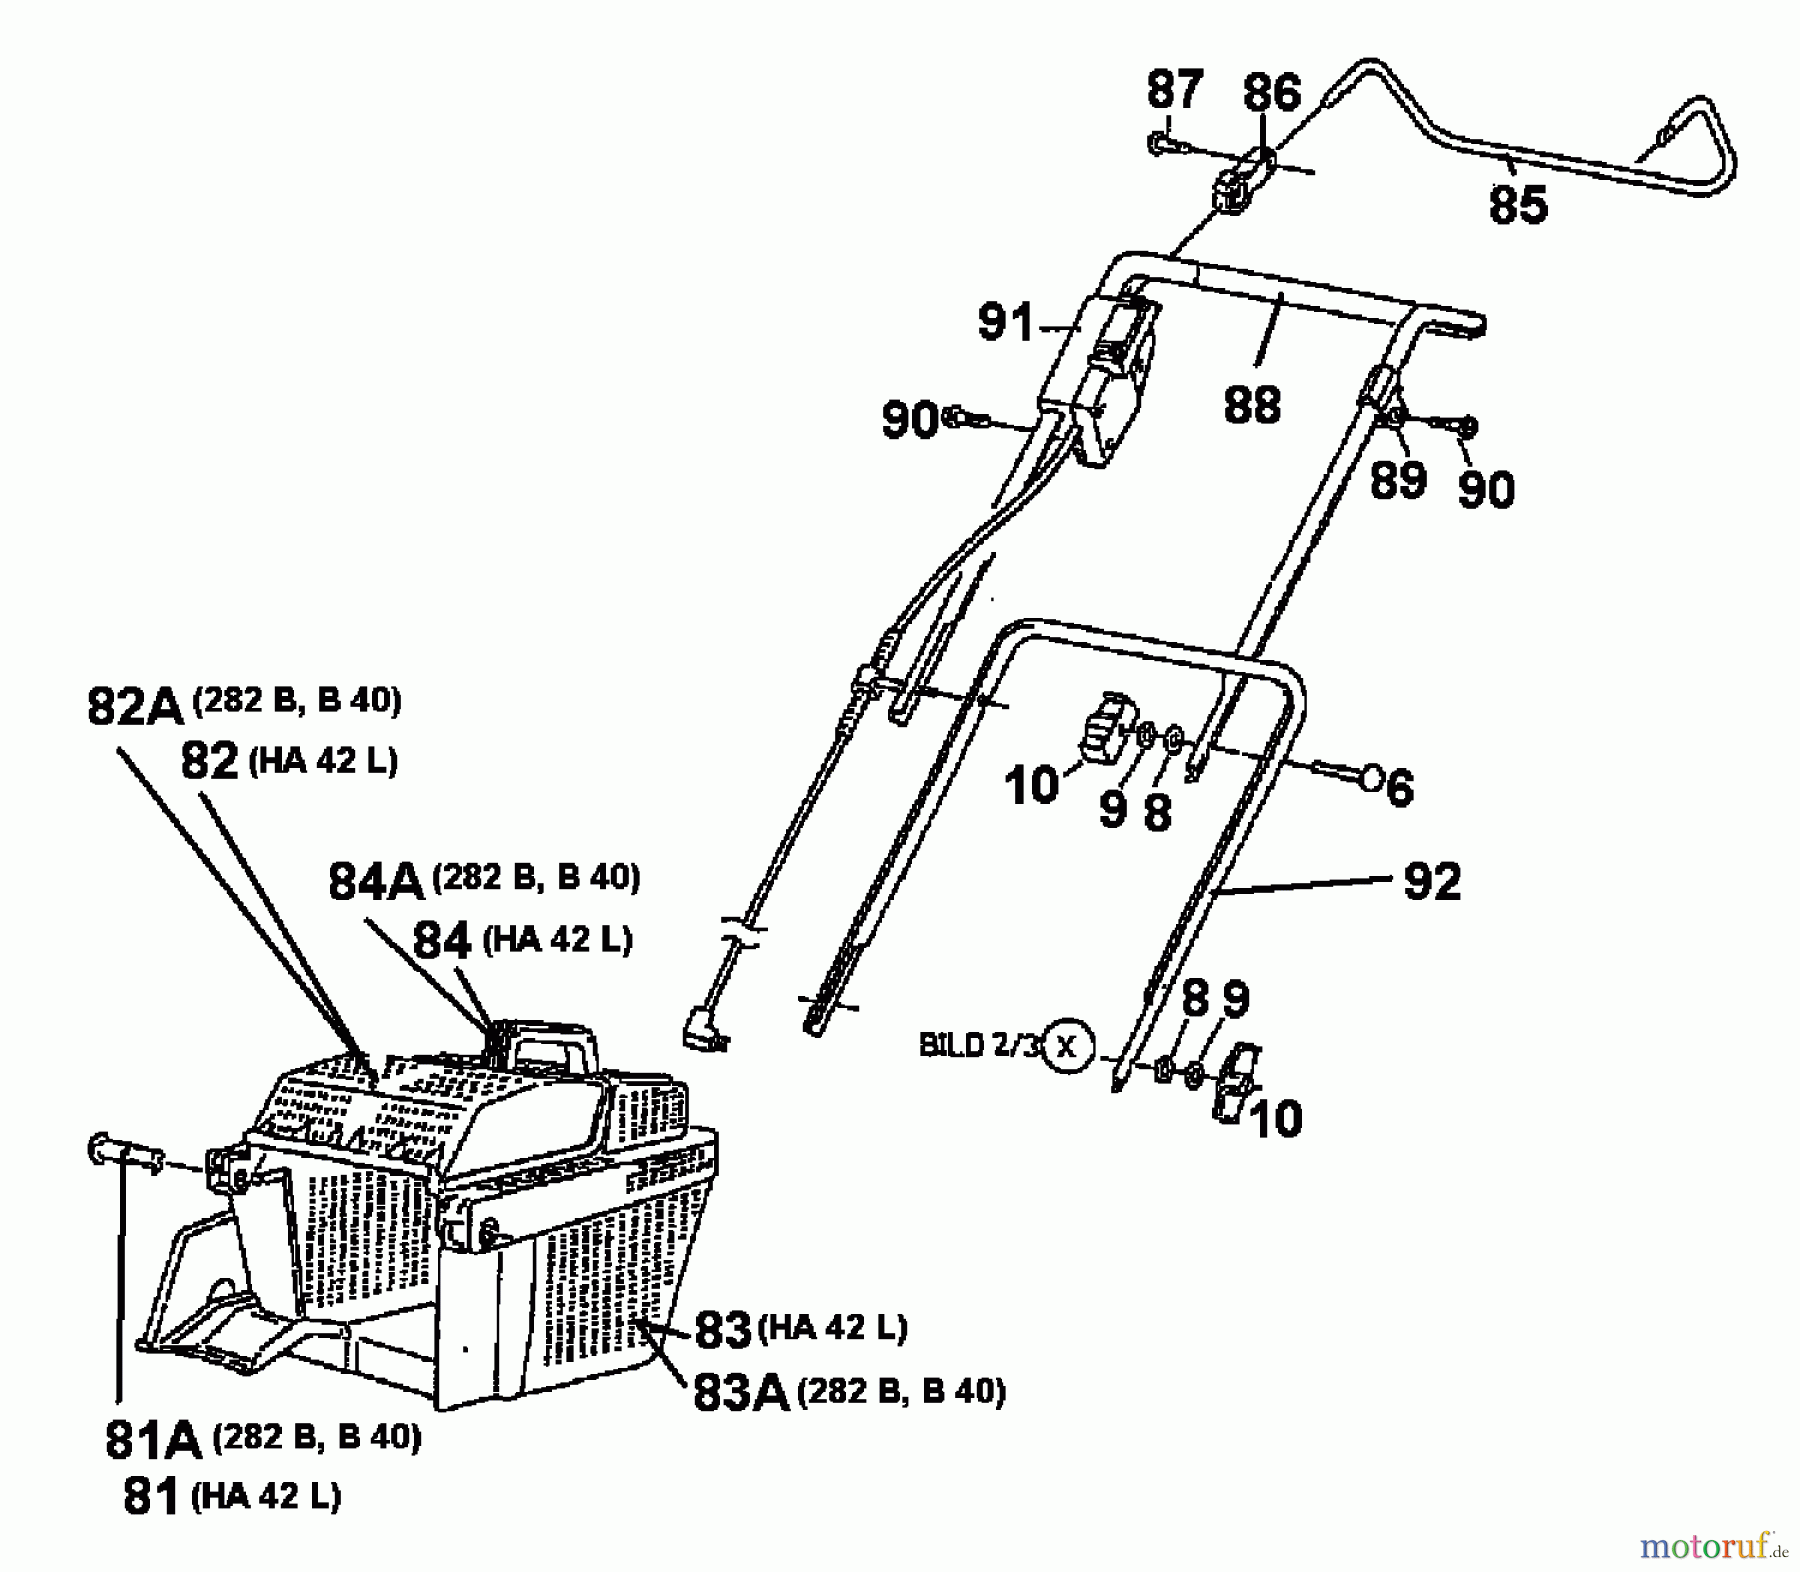  Gutbrod Battery mower HA 42 L 04040.01  (1997) Grass box, Handle